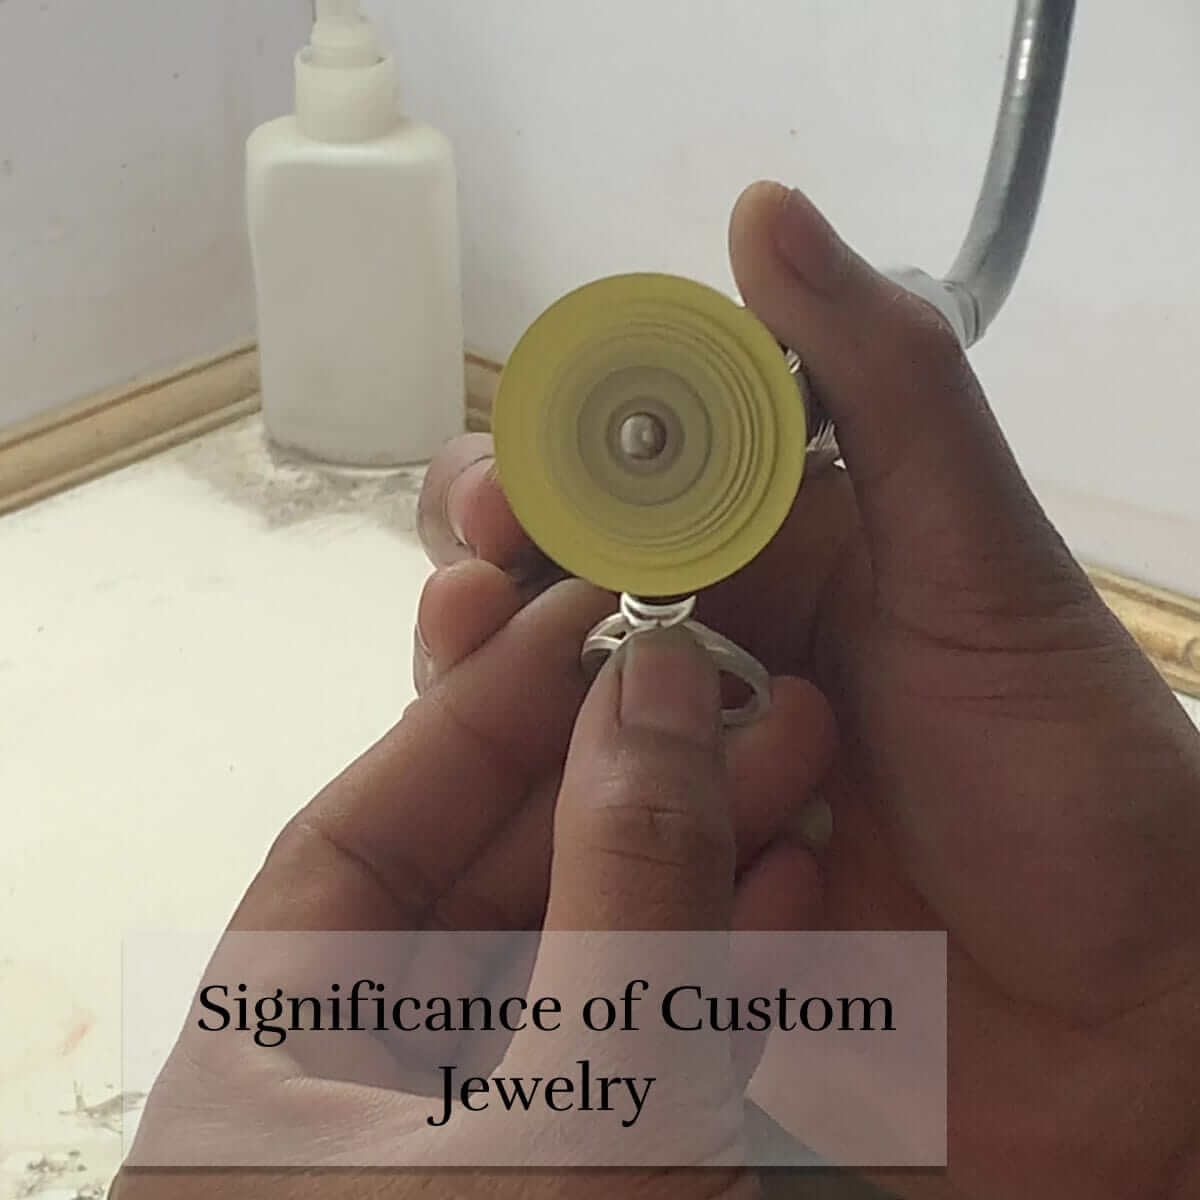 The benefits of choosing custom jewelry